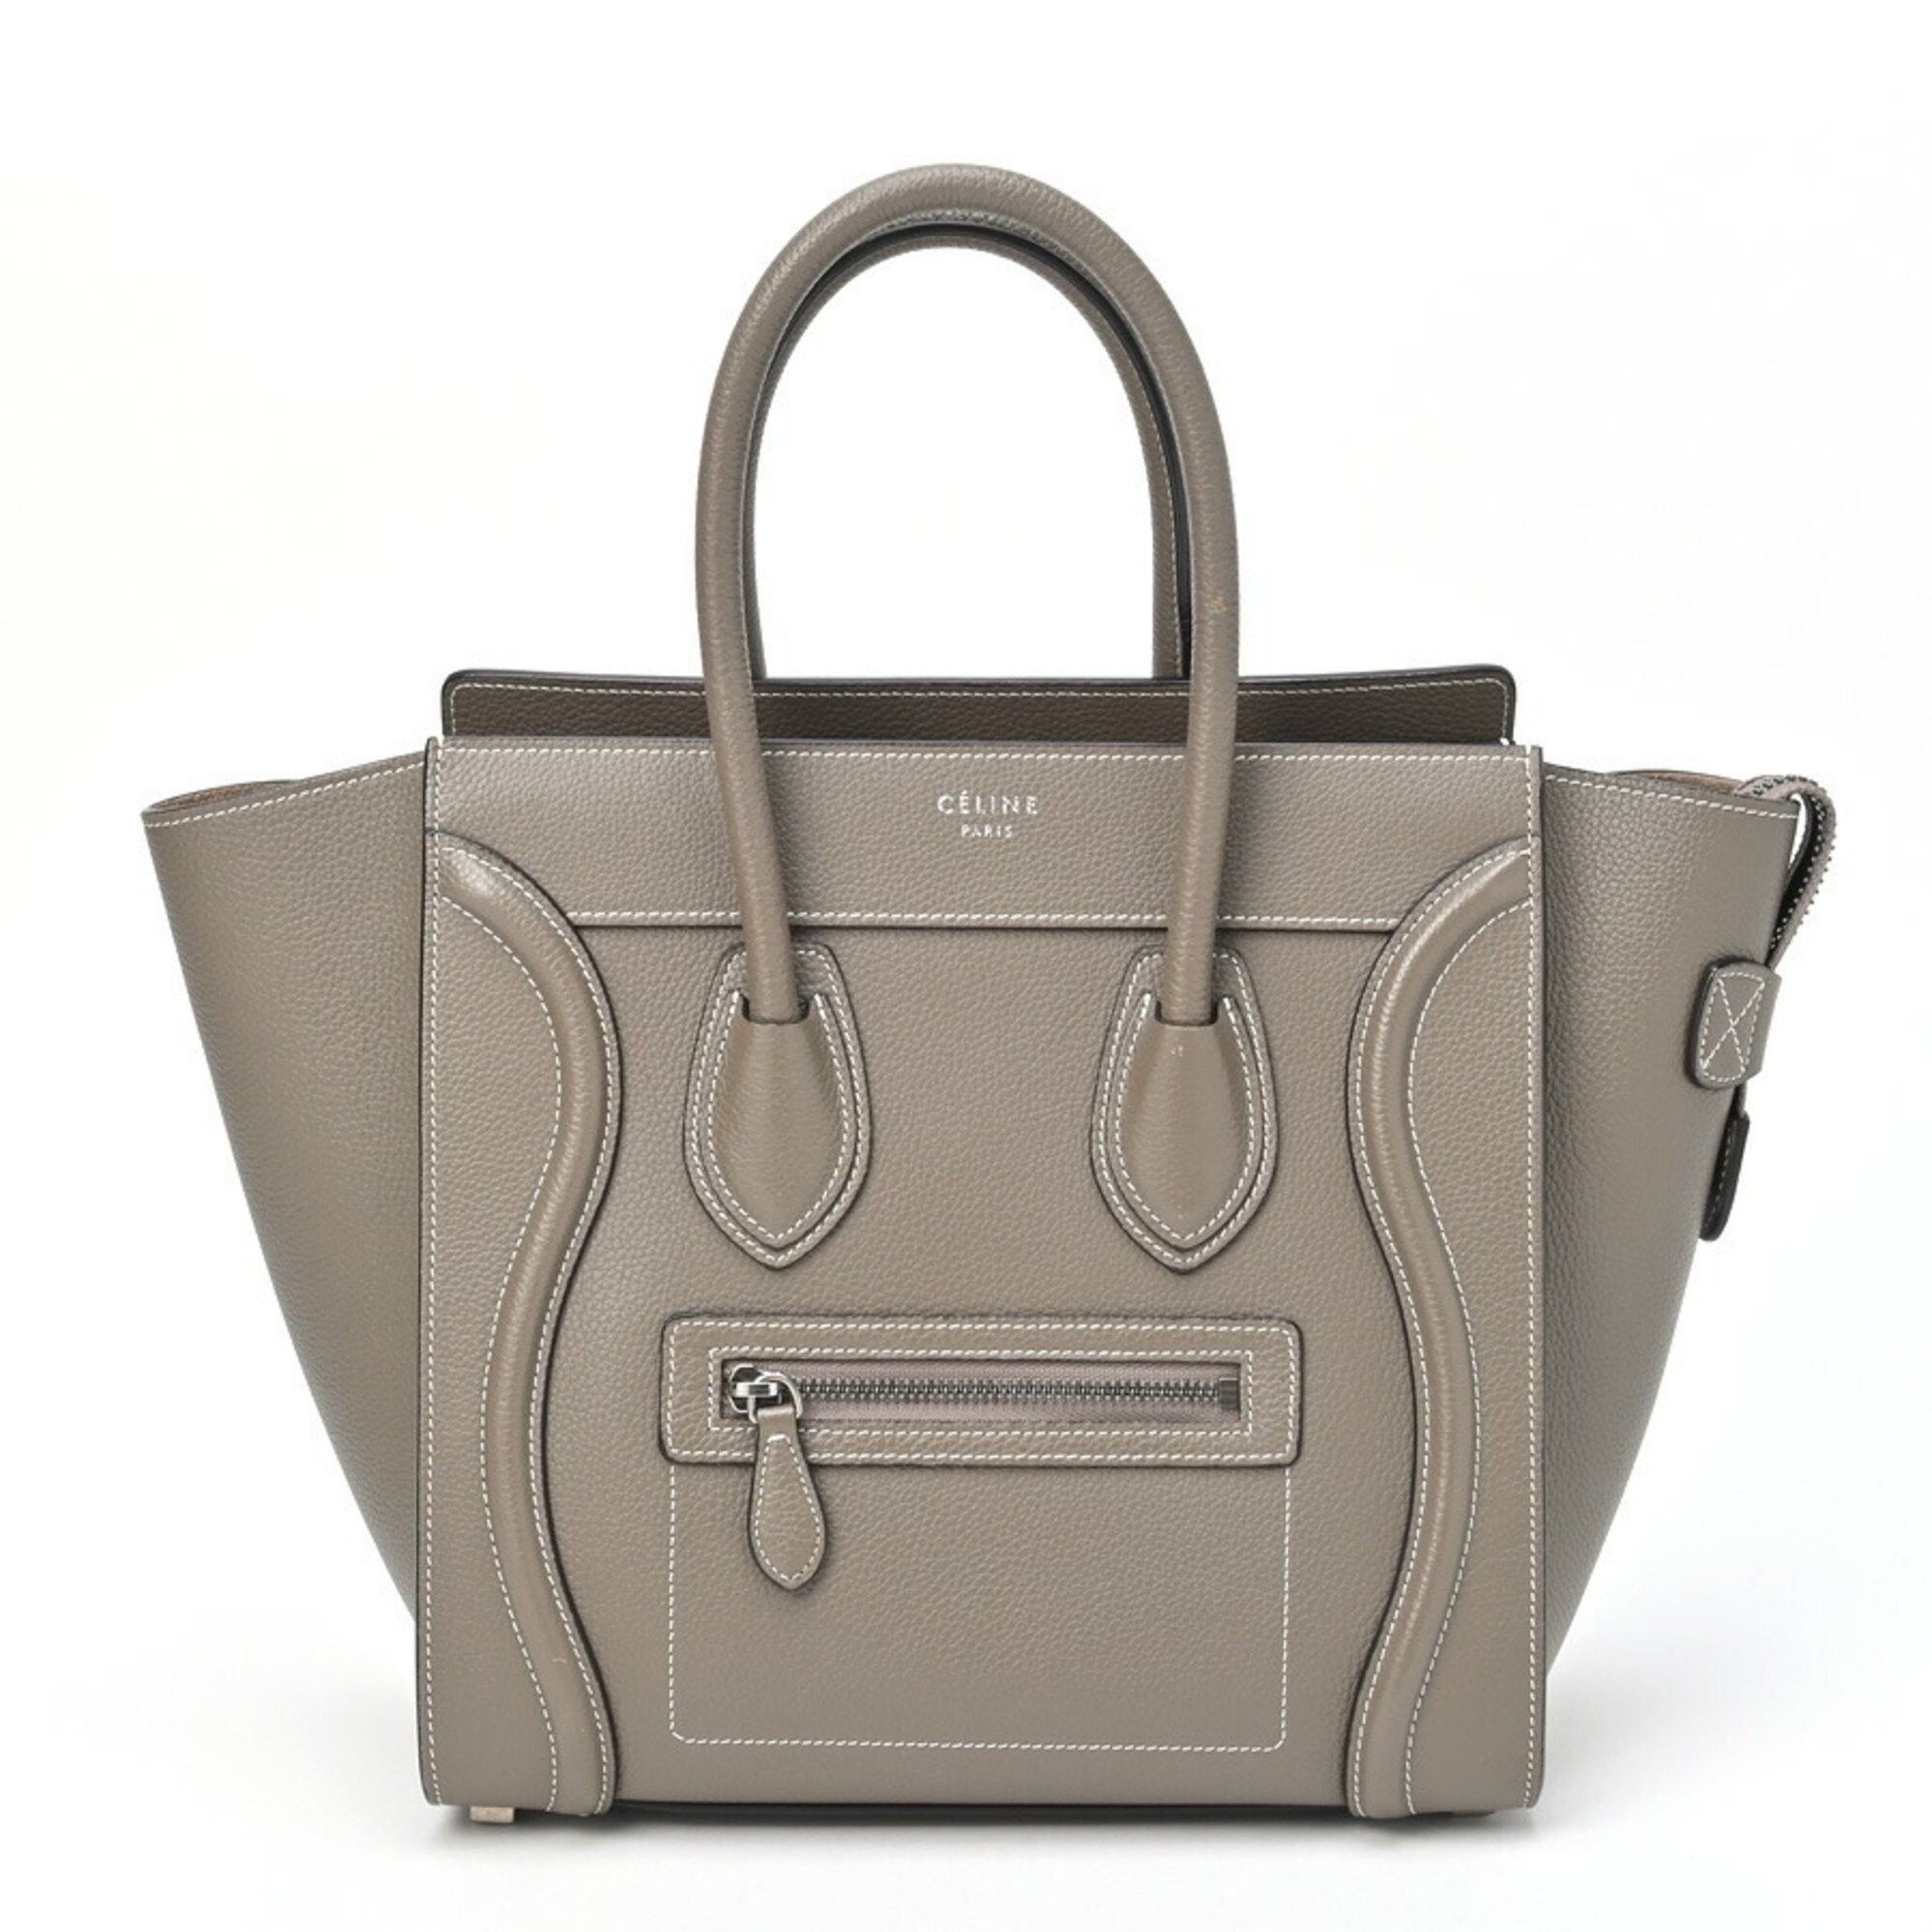 image of Celine Céline Luggage Handbag in Beige, Women's